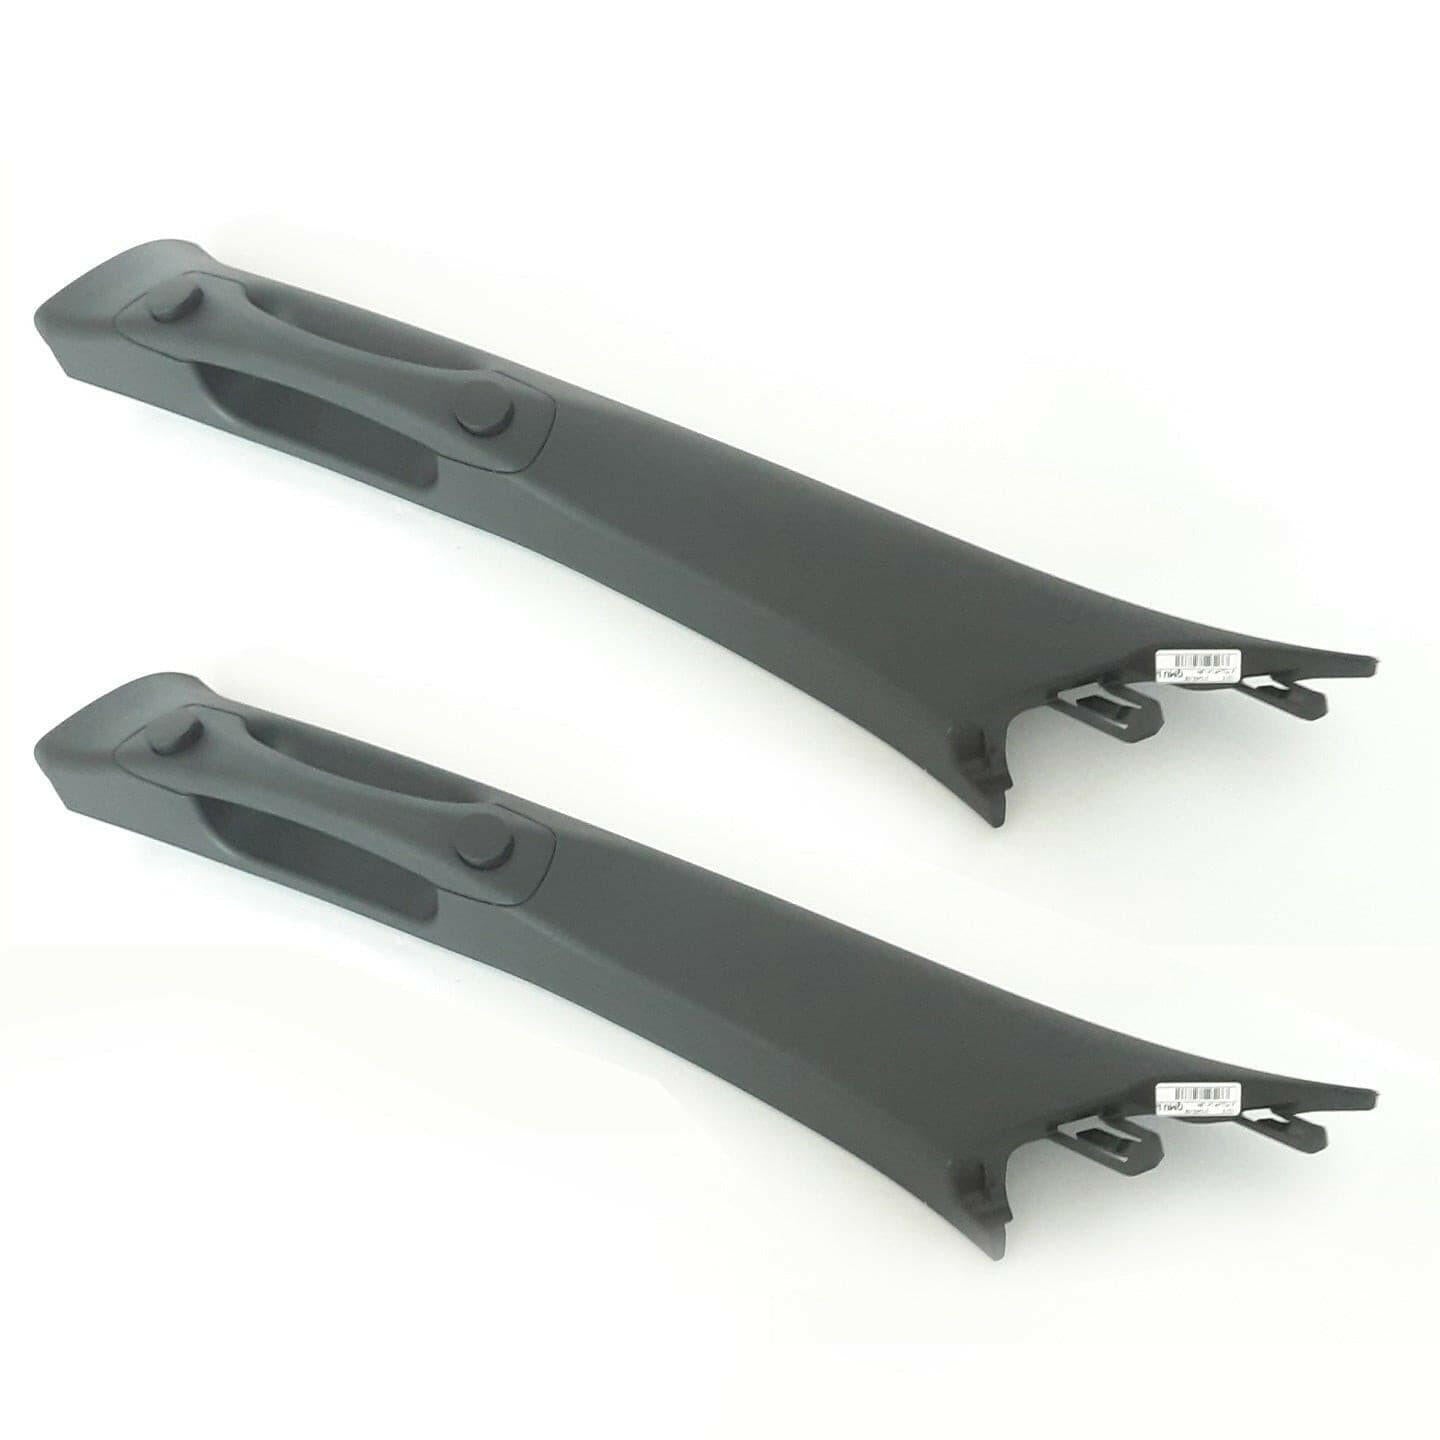 Genuine Ssangyong A-Pillar integrated grab handle trim BLACK or GREY (Pair).